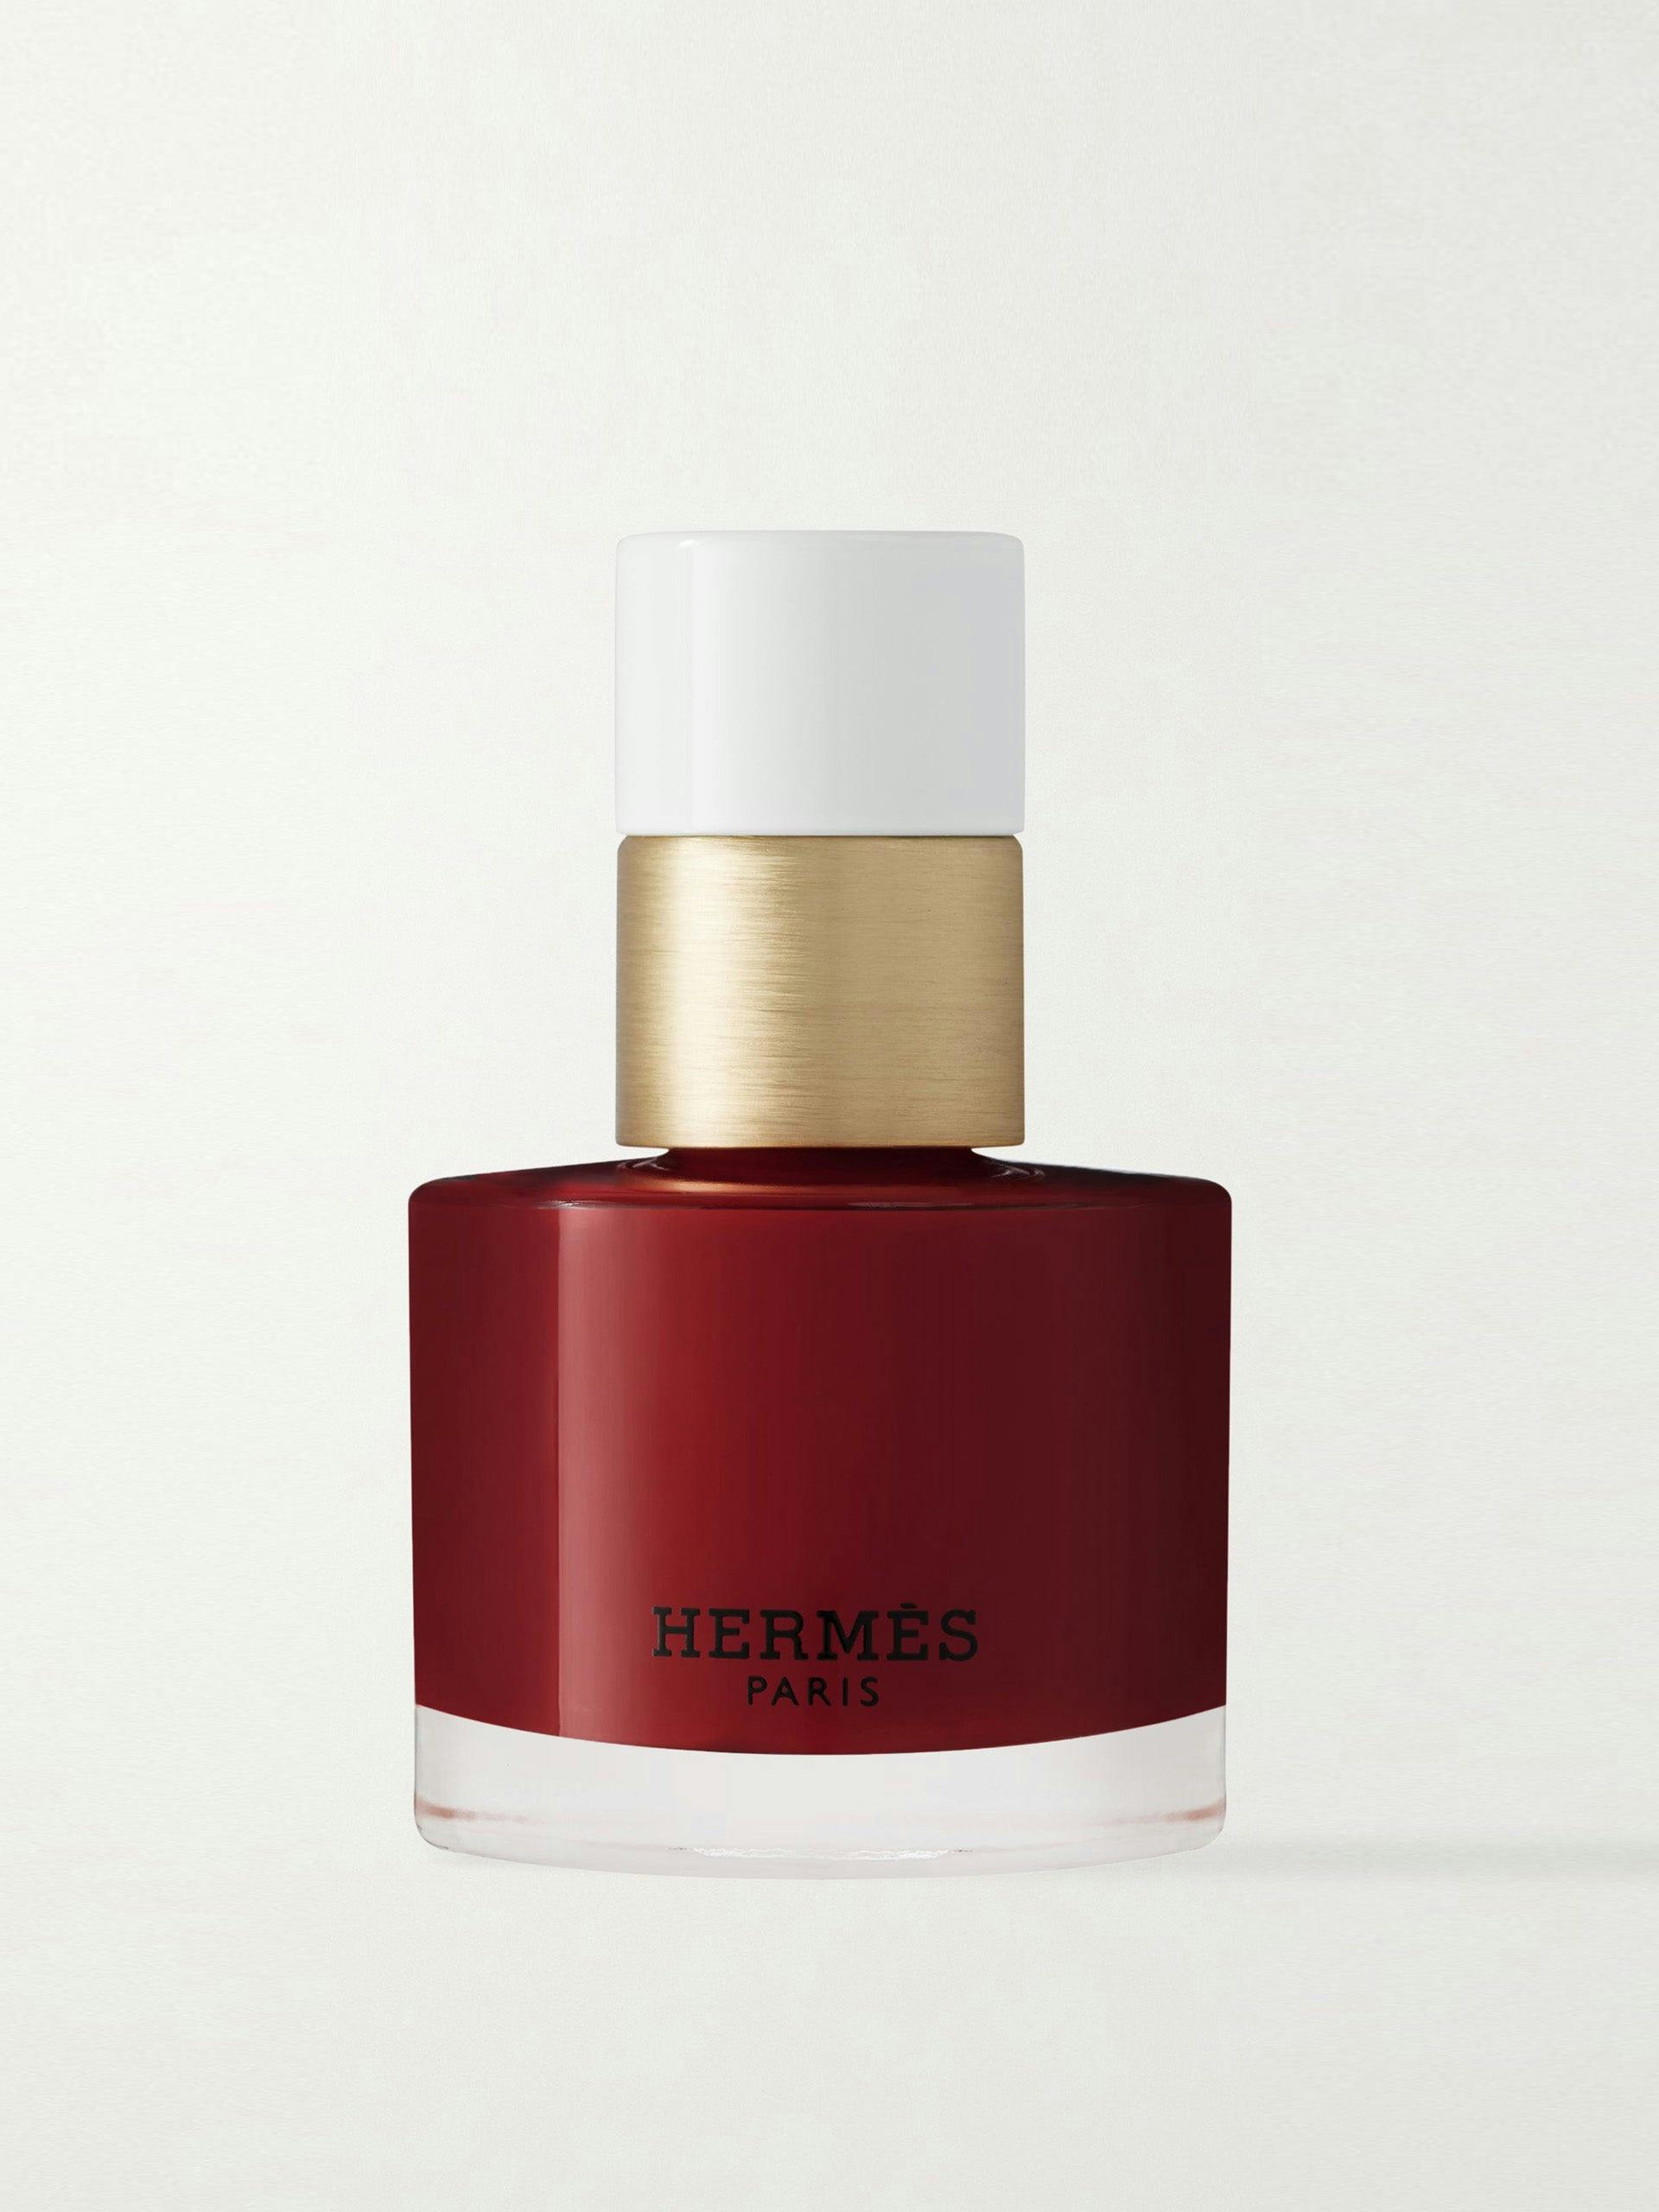 Les Mains Hermès nail enamel in 85 Rouge H